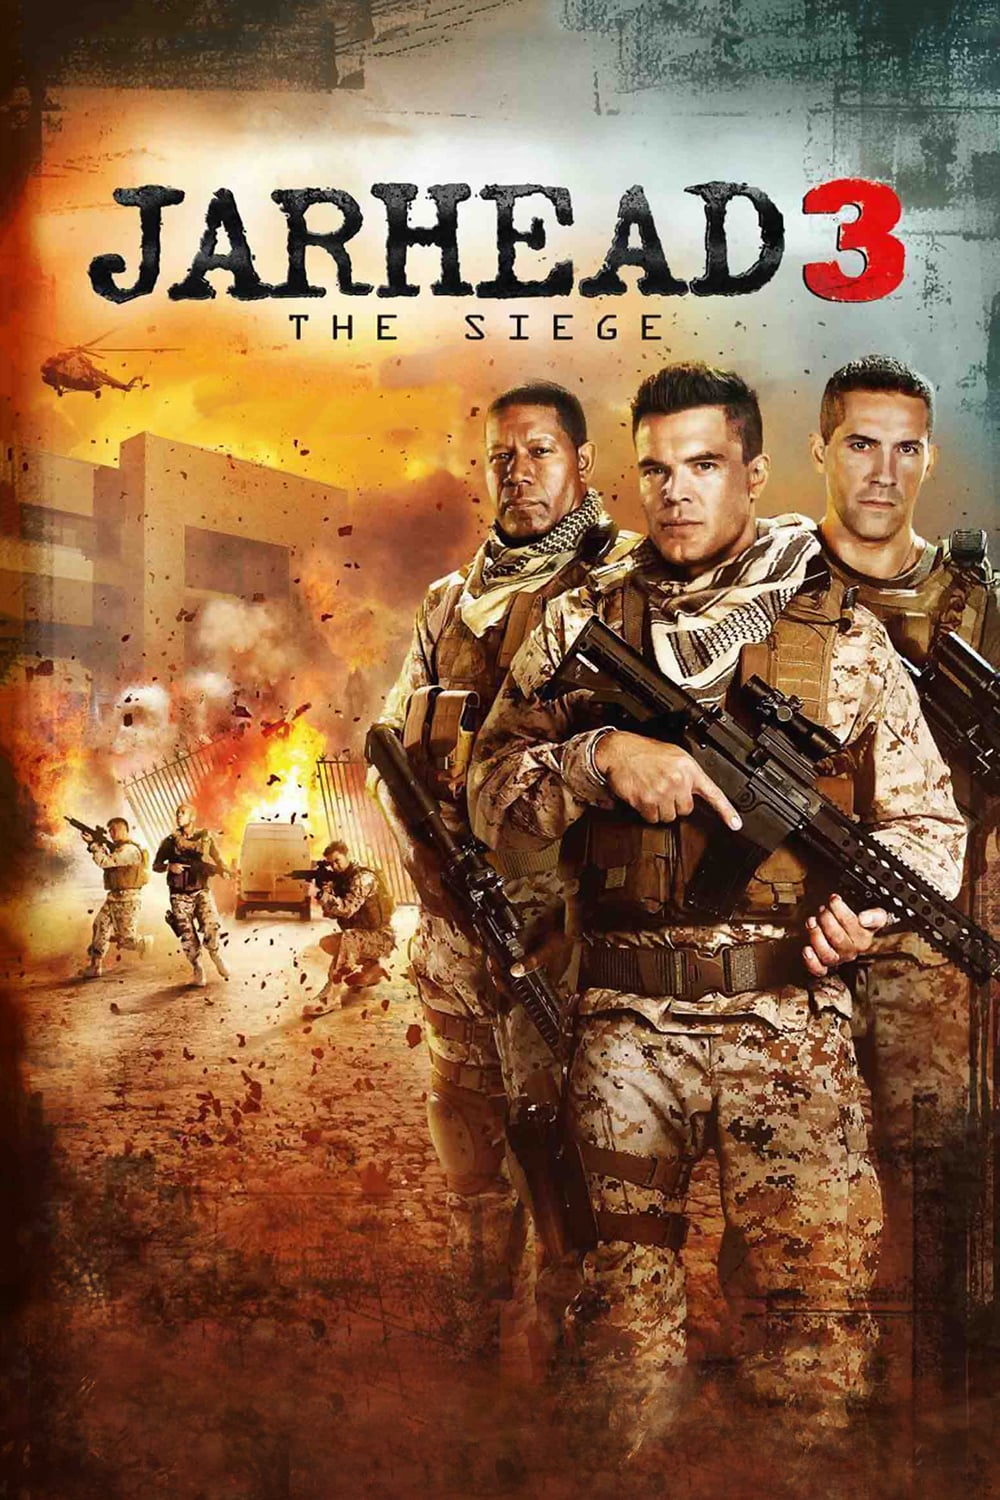 Nonton film Jarhead 3 The Siege layarkaca21 indoxx1 ganool online streaming terbaru